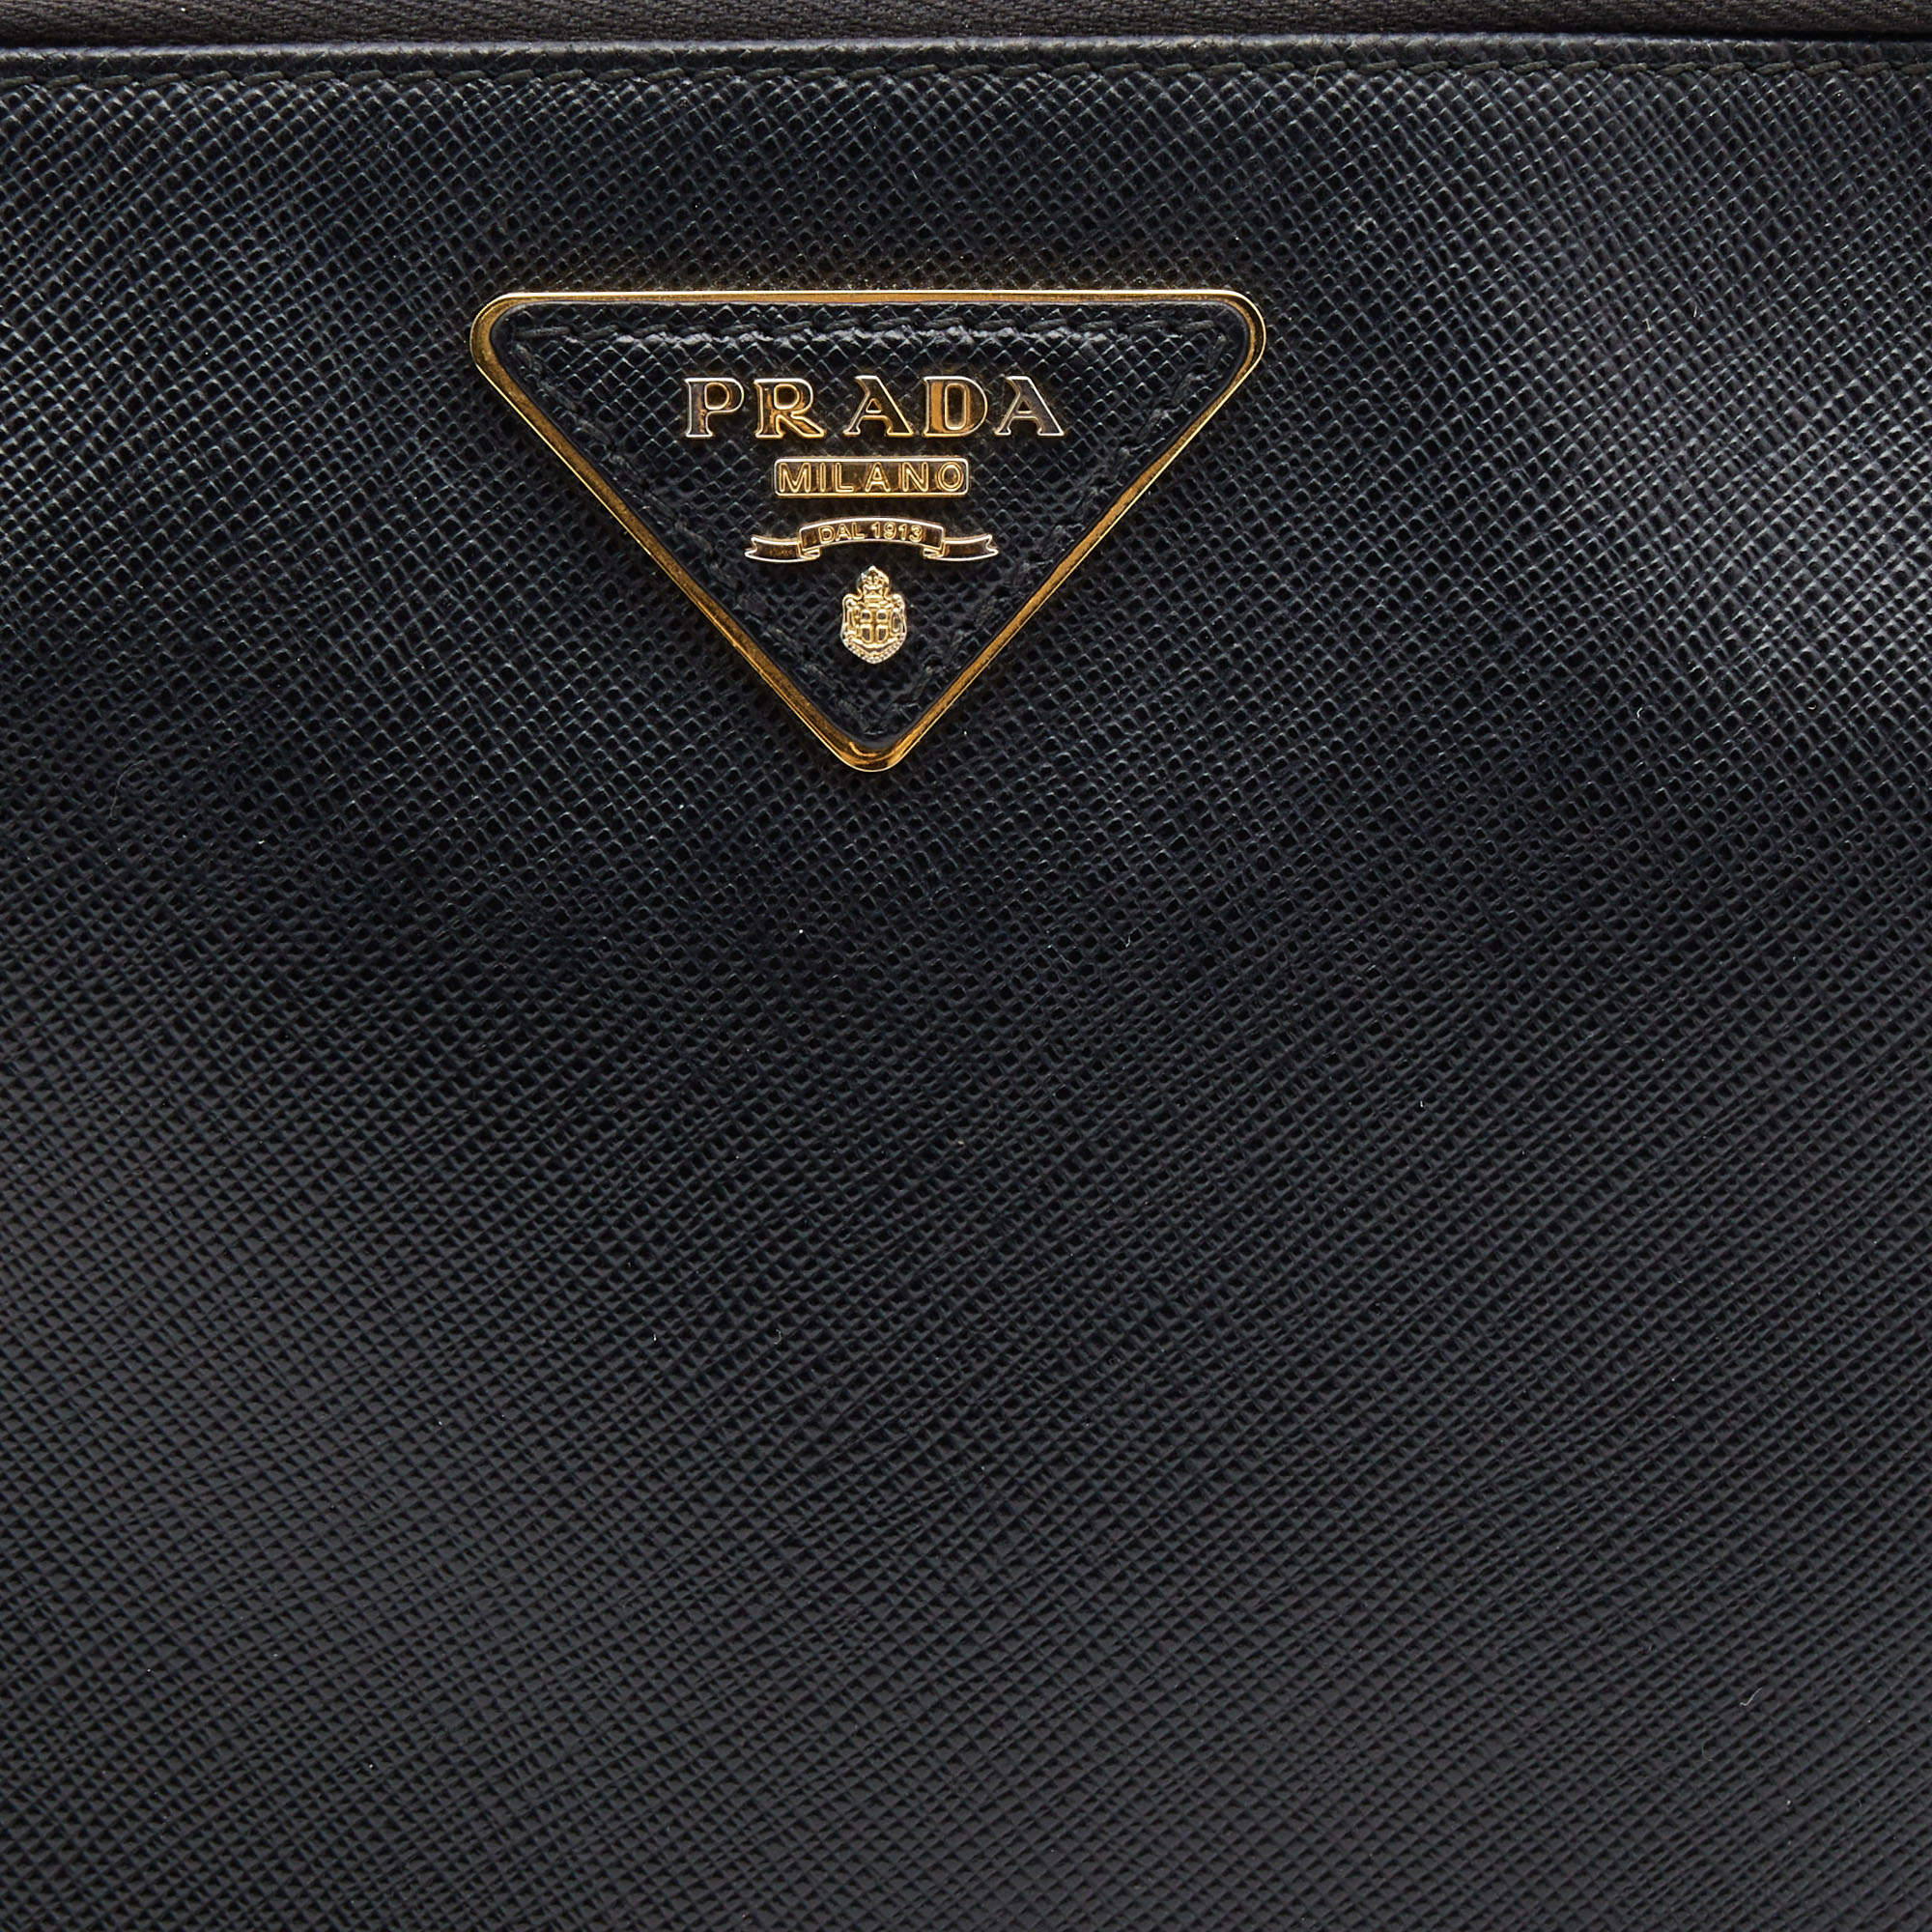 Prada BN924k Saffiano Lux Flap Bag.